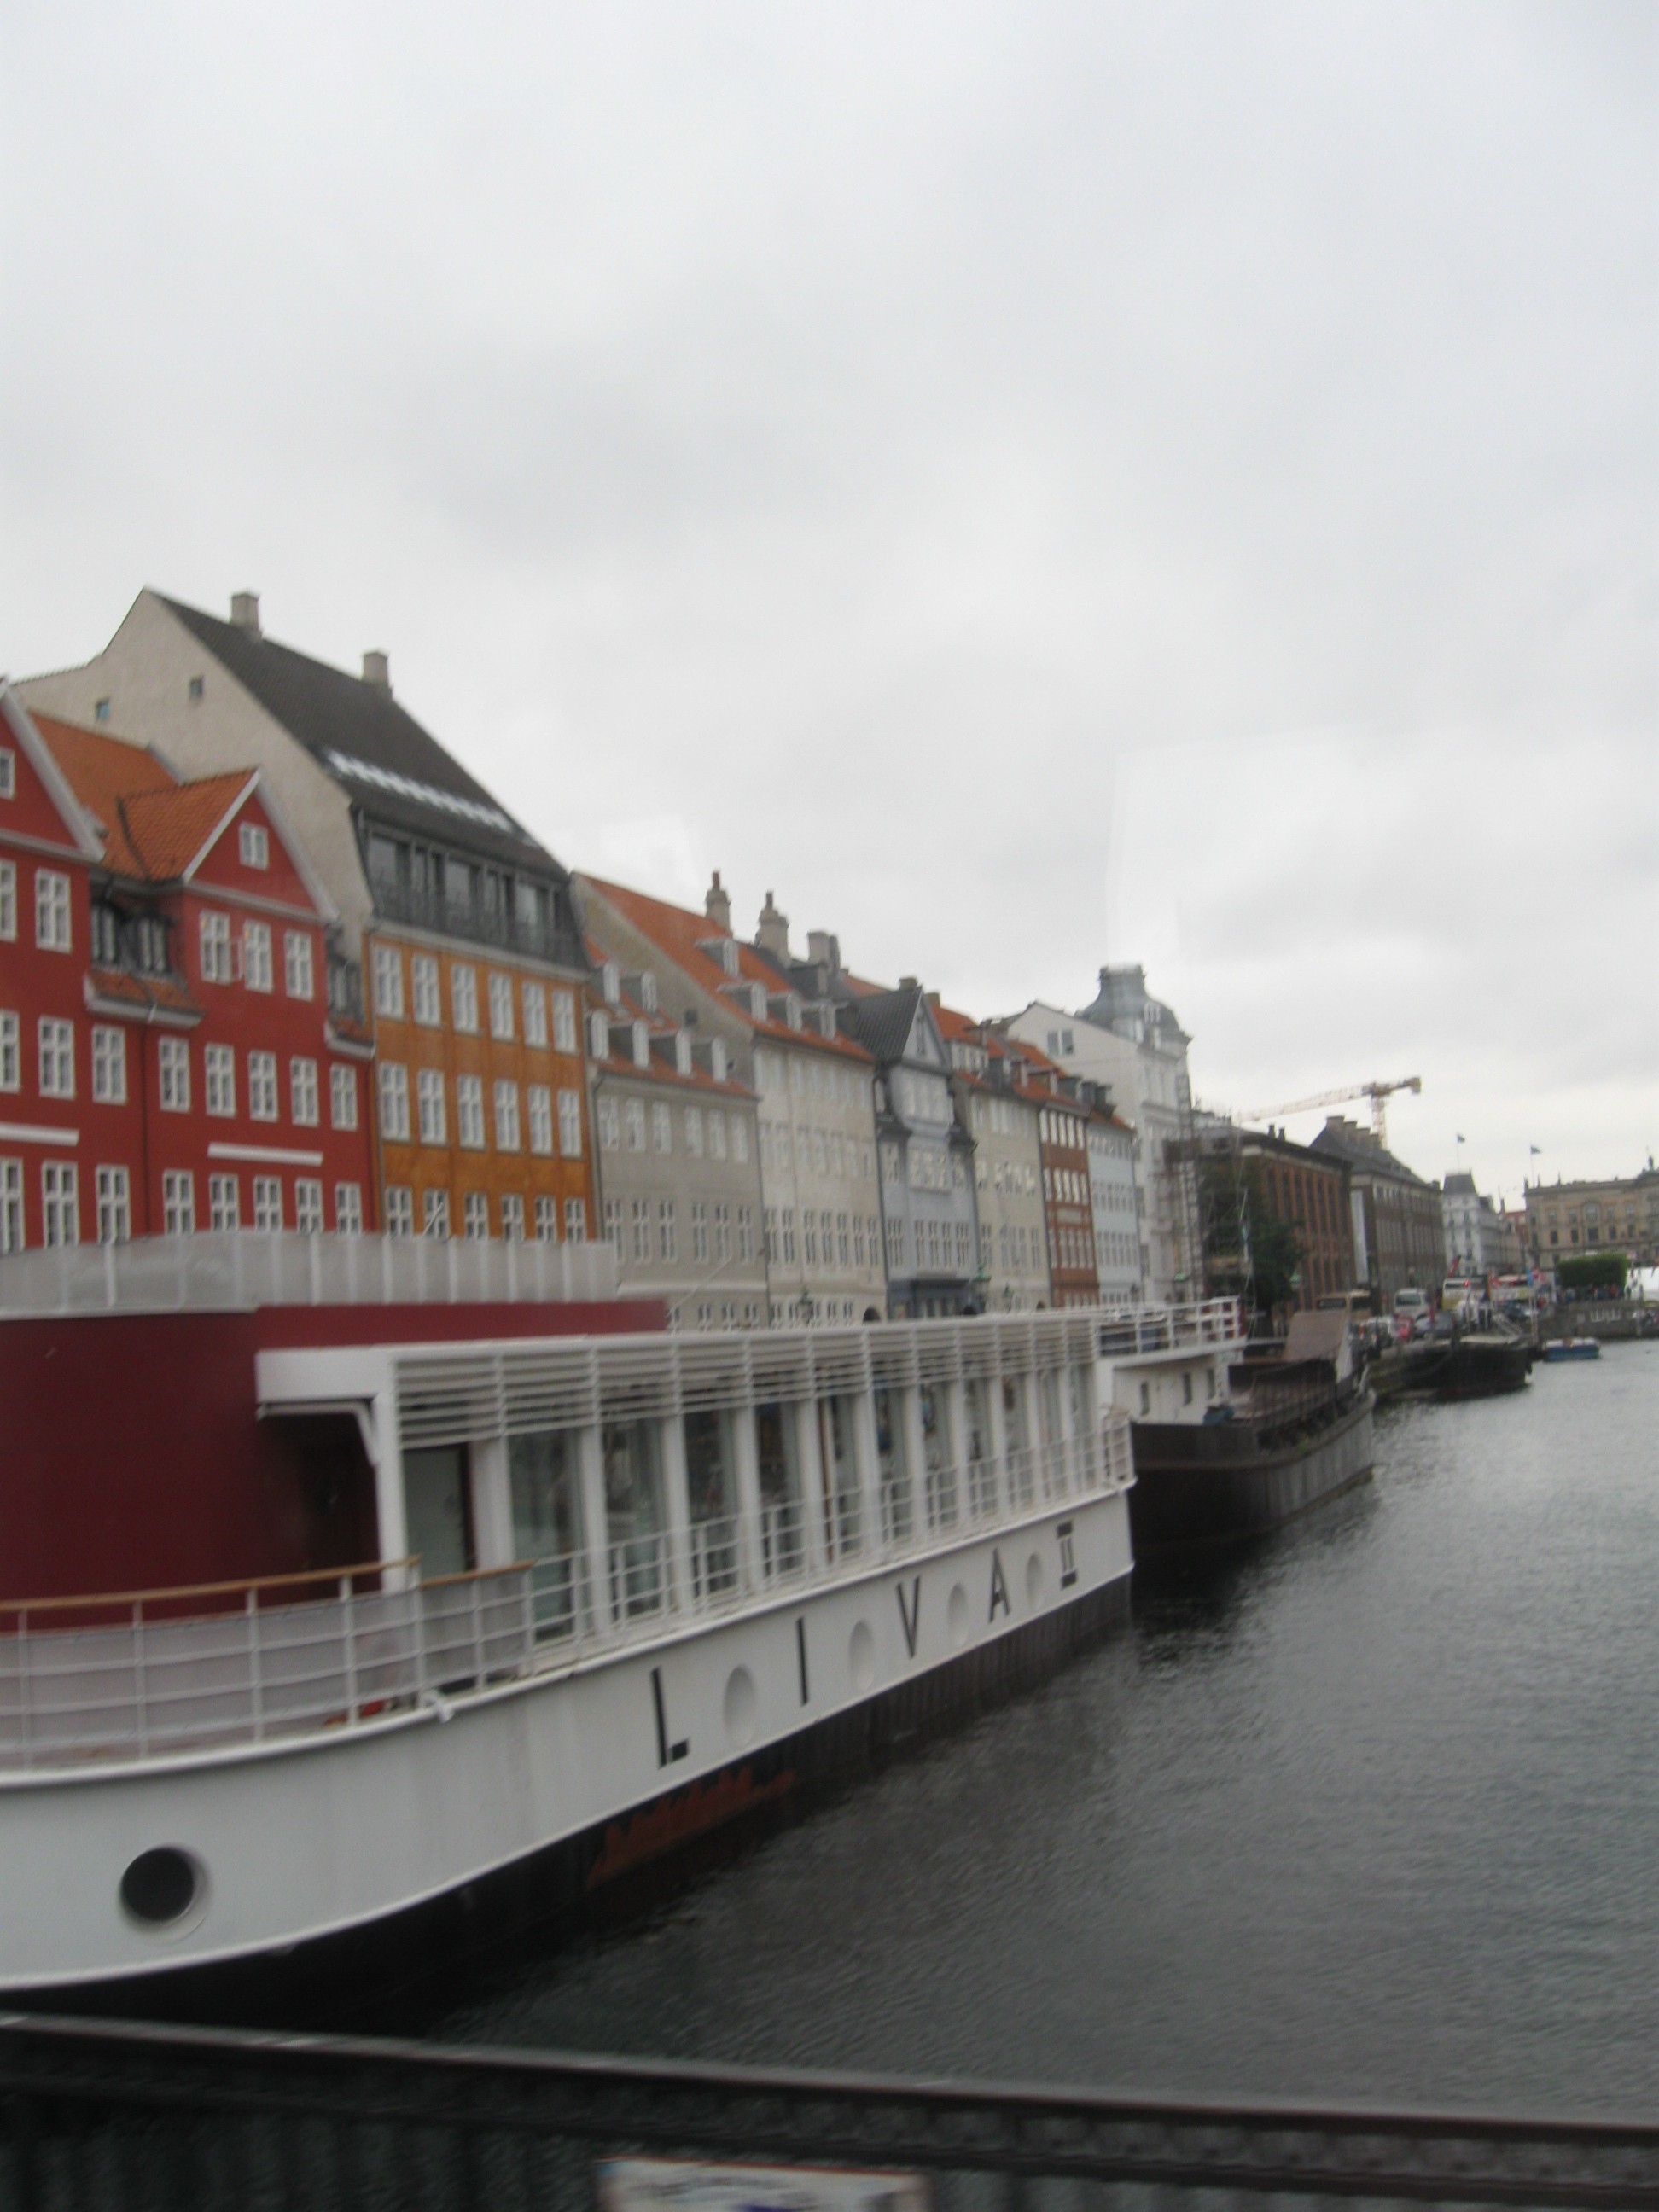 Набережная Ньюхавн в Копенгагене